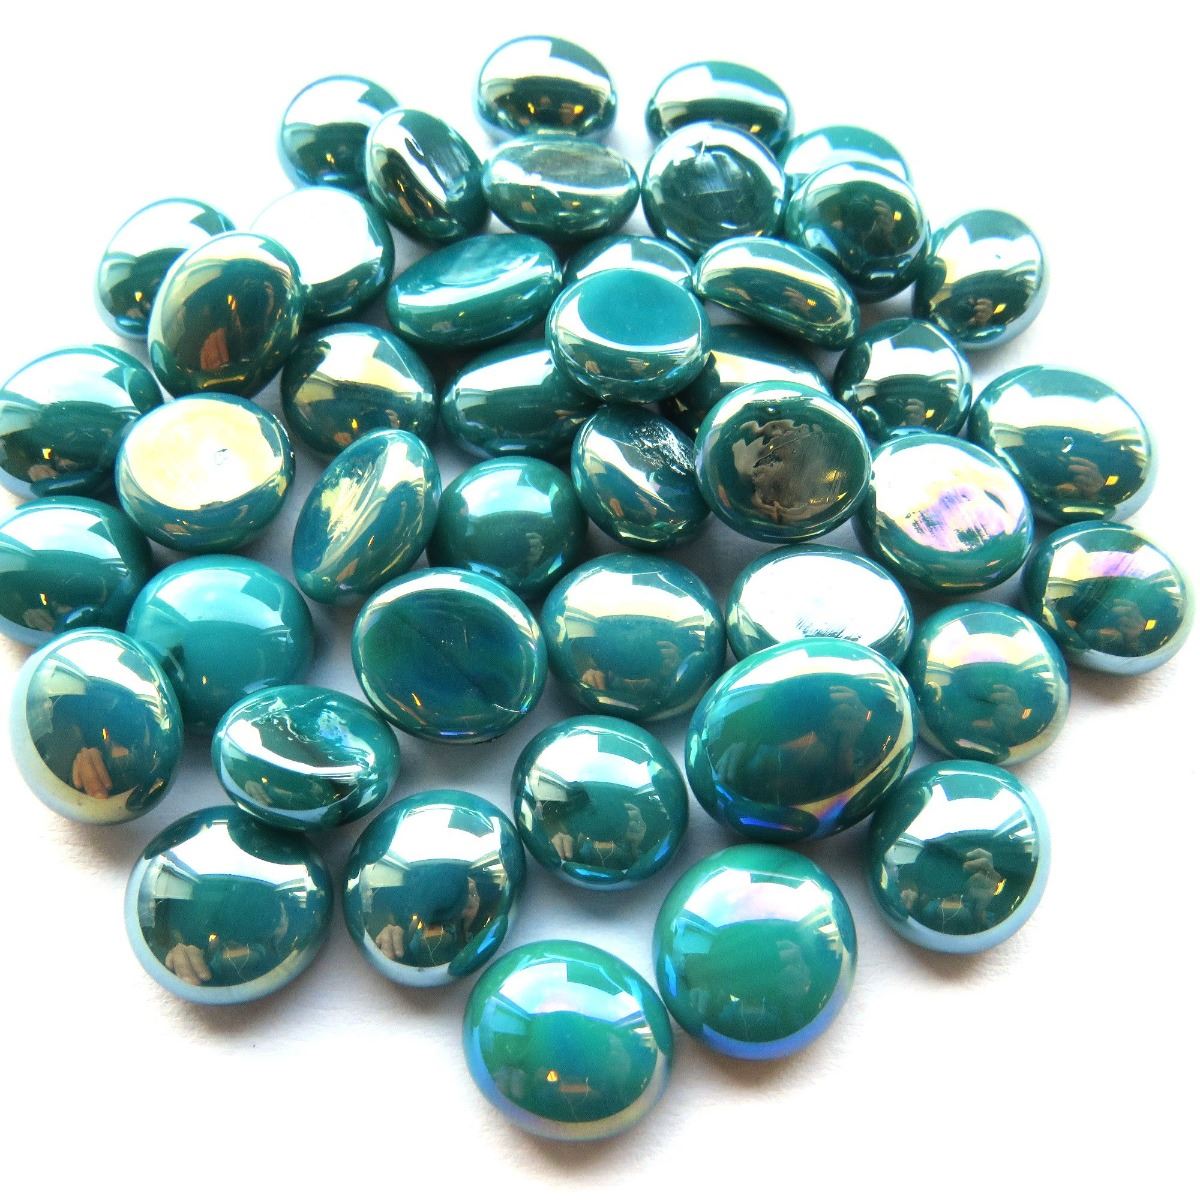 Mini Gems - Teal Opalescent